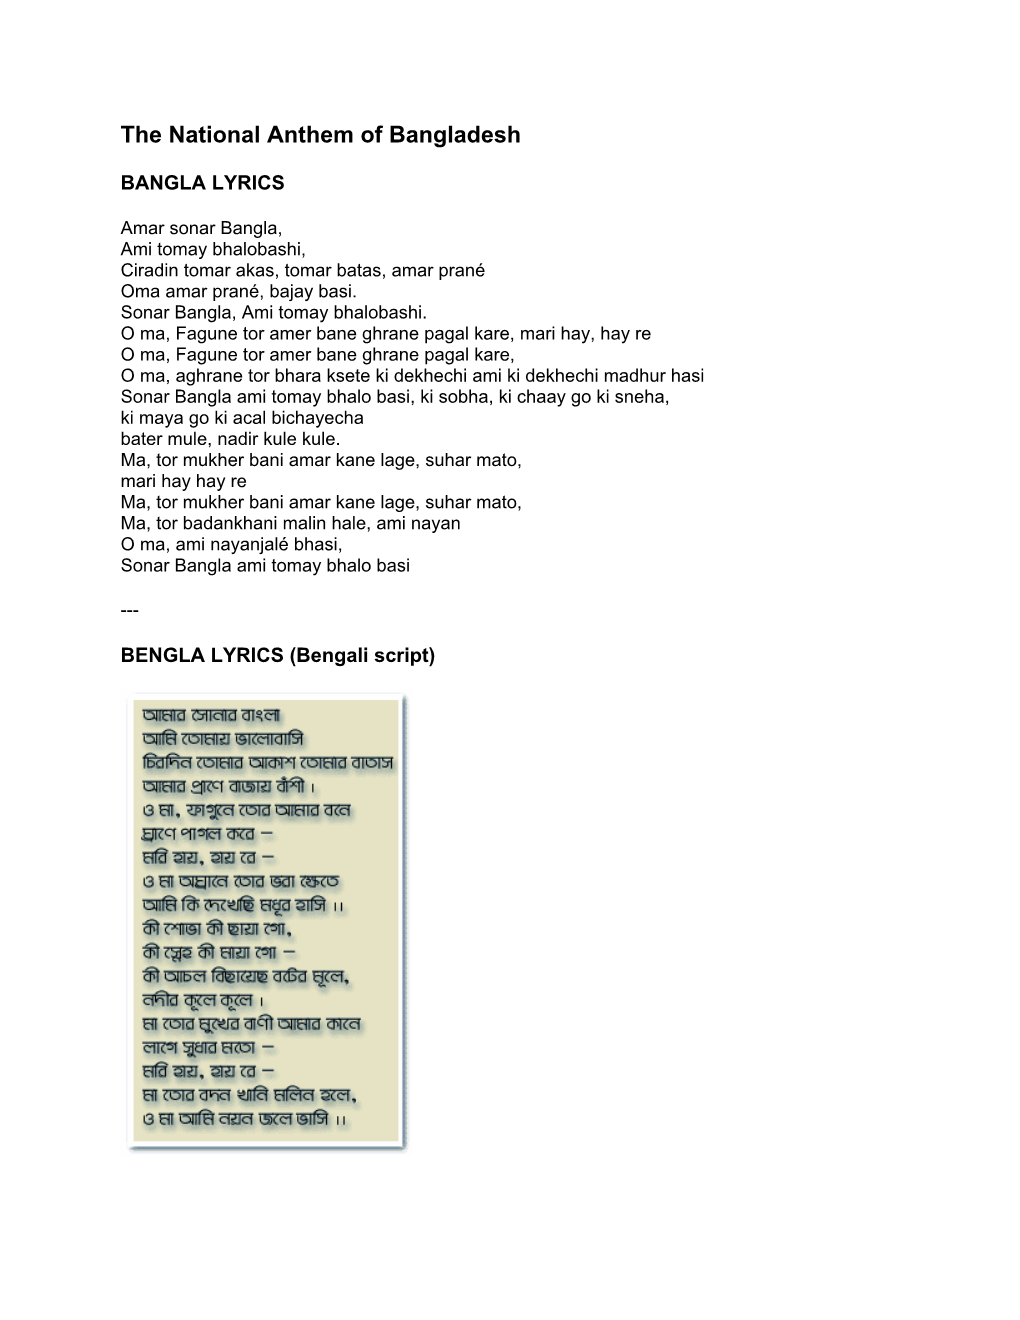 The National Anthem of Bangladesh